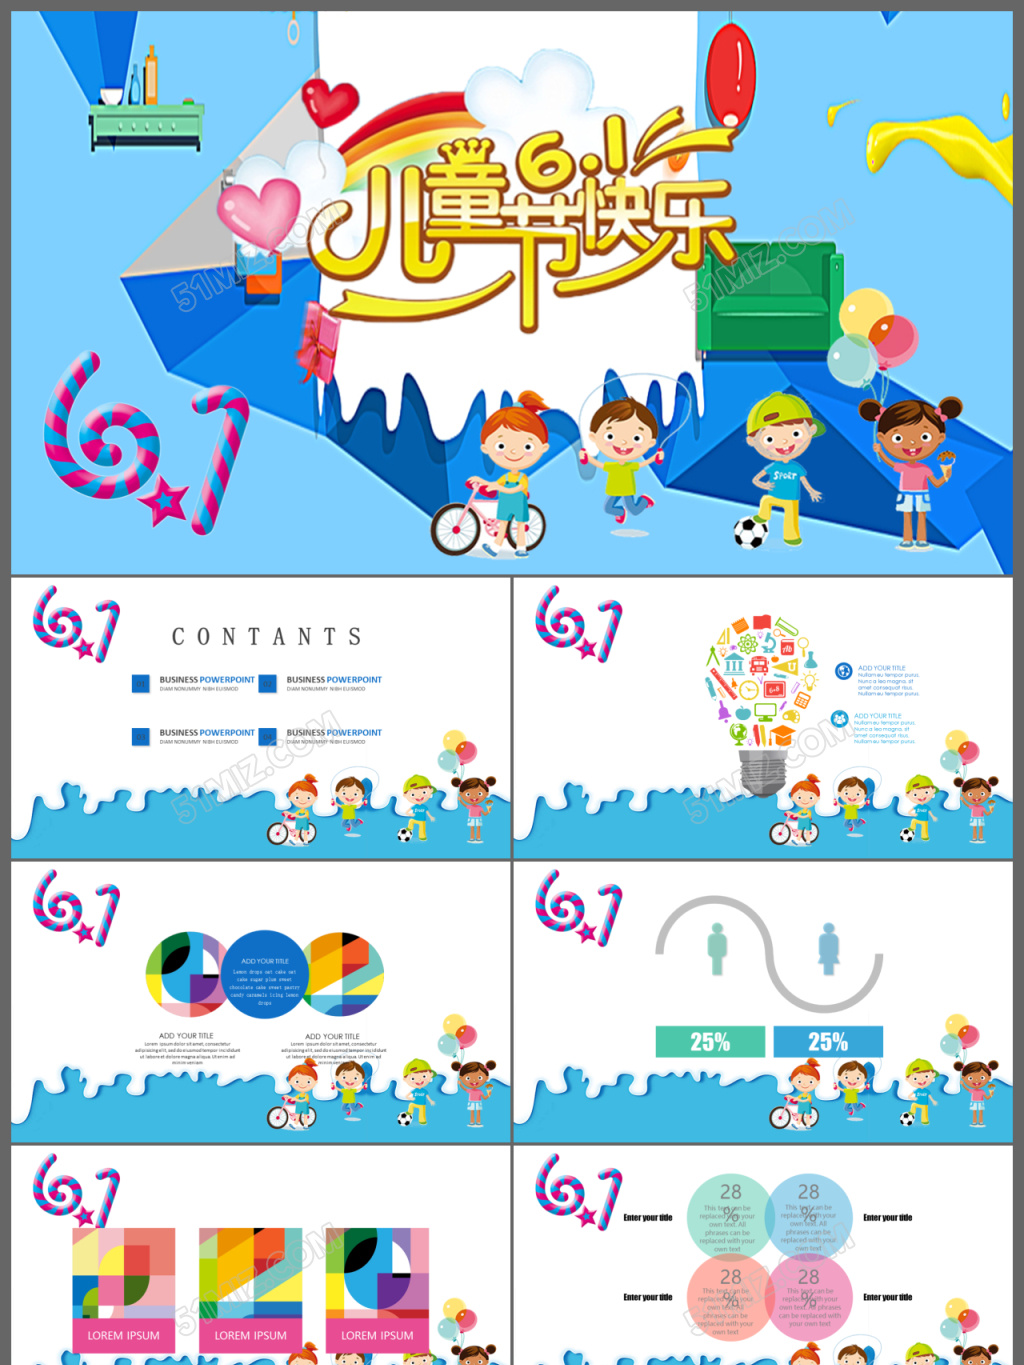 PPT模板-素材下载-图创网六月一日国际儿童节简约海报-PPT模板-图创网